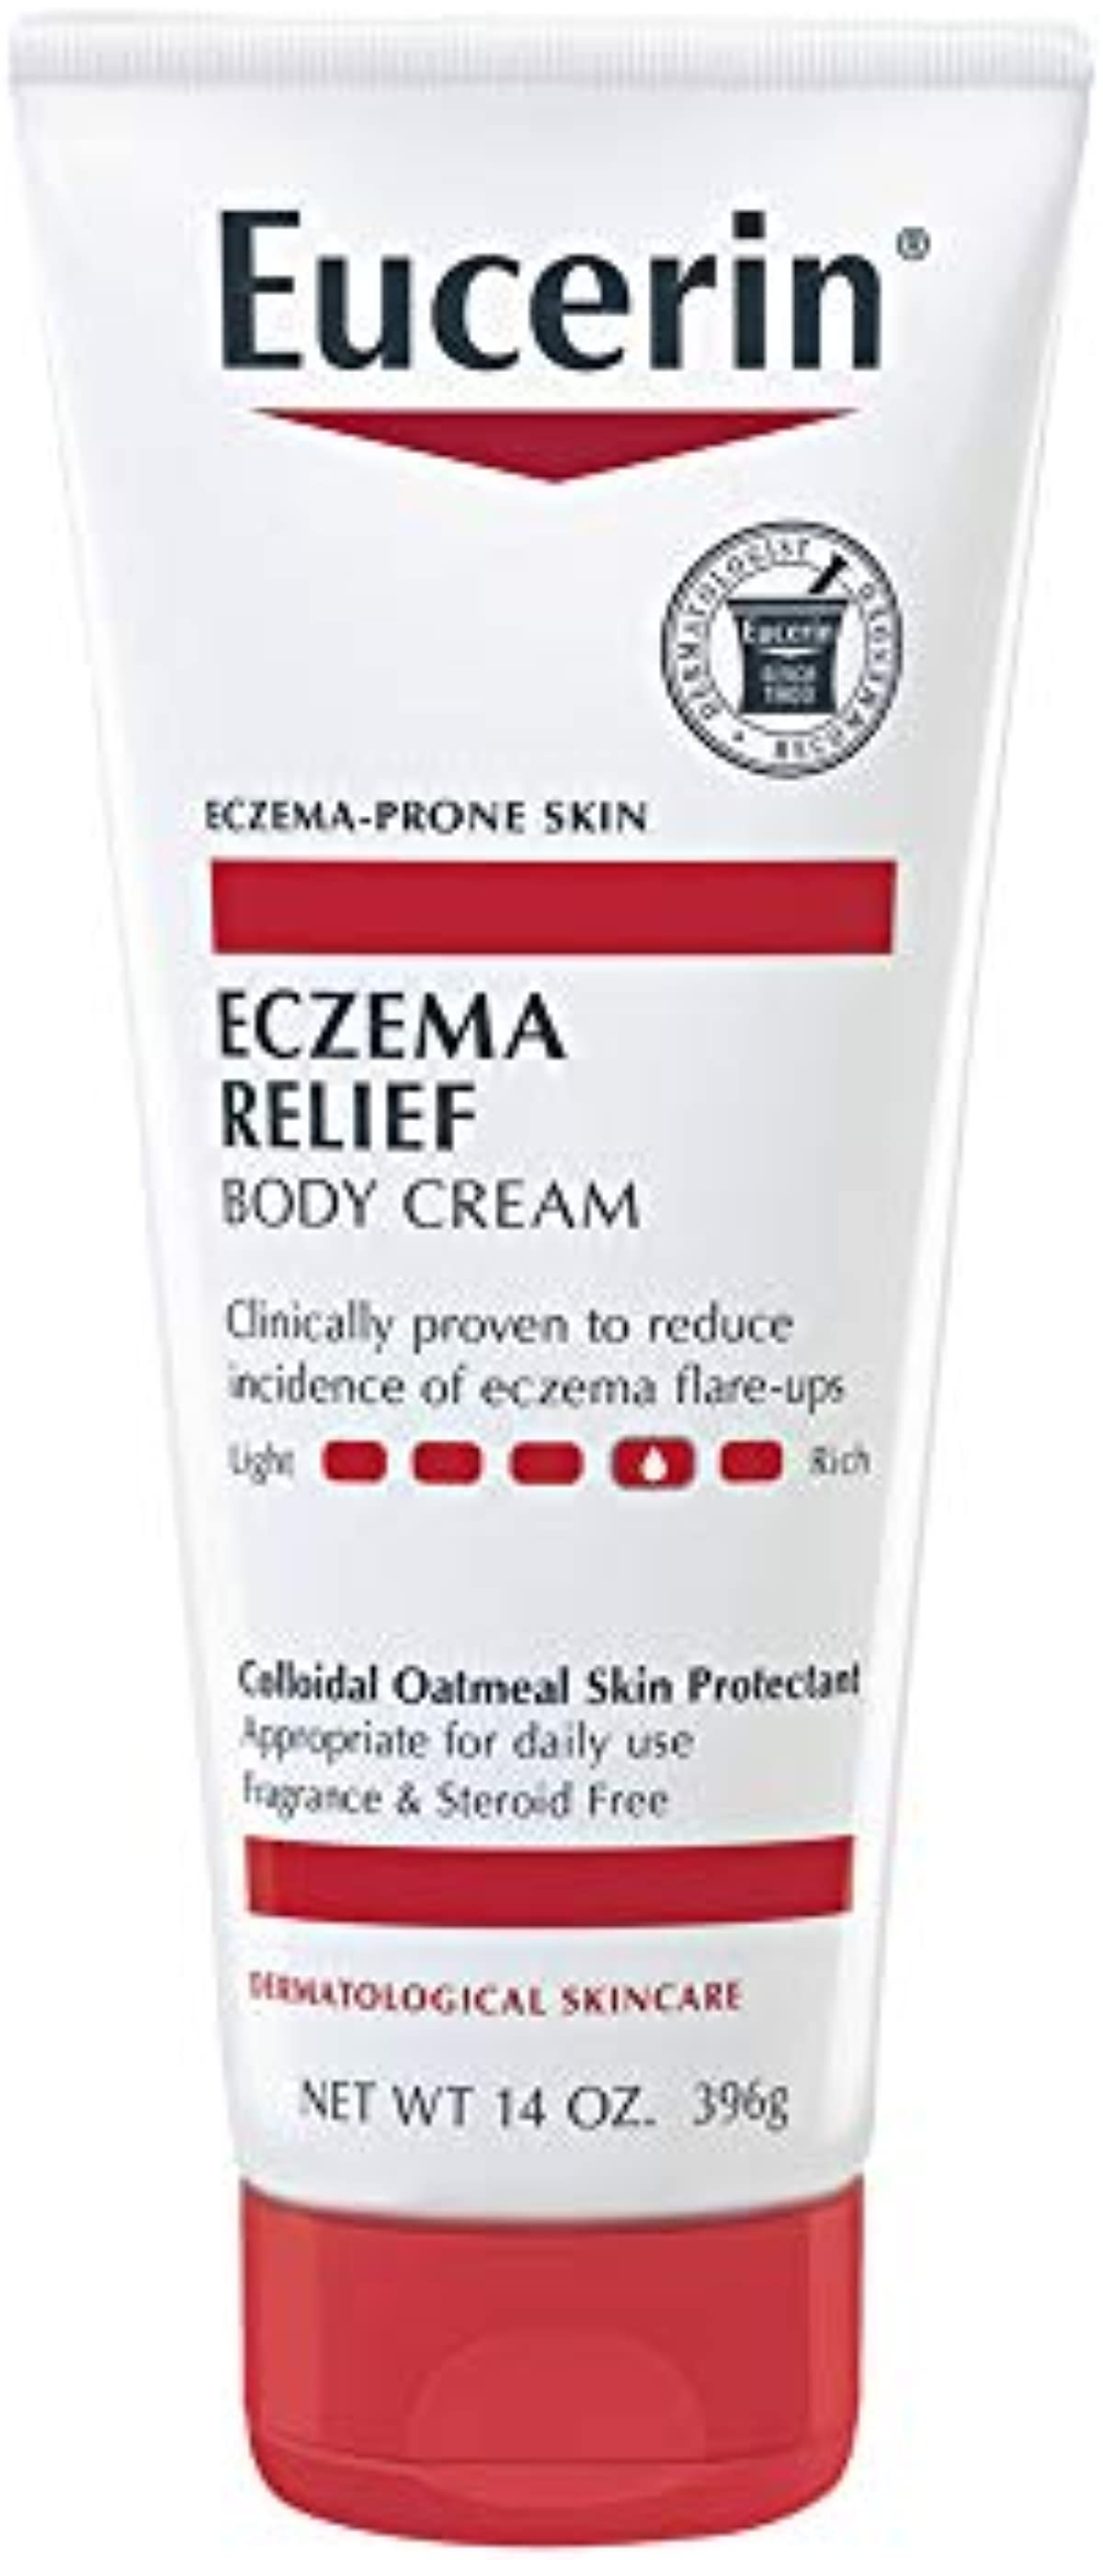 Eucerin Eczema Relief Body Cream, Eczema Cream, Skin Care for Eczema, 14 Oz Tube